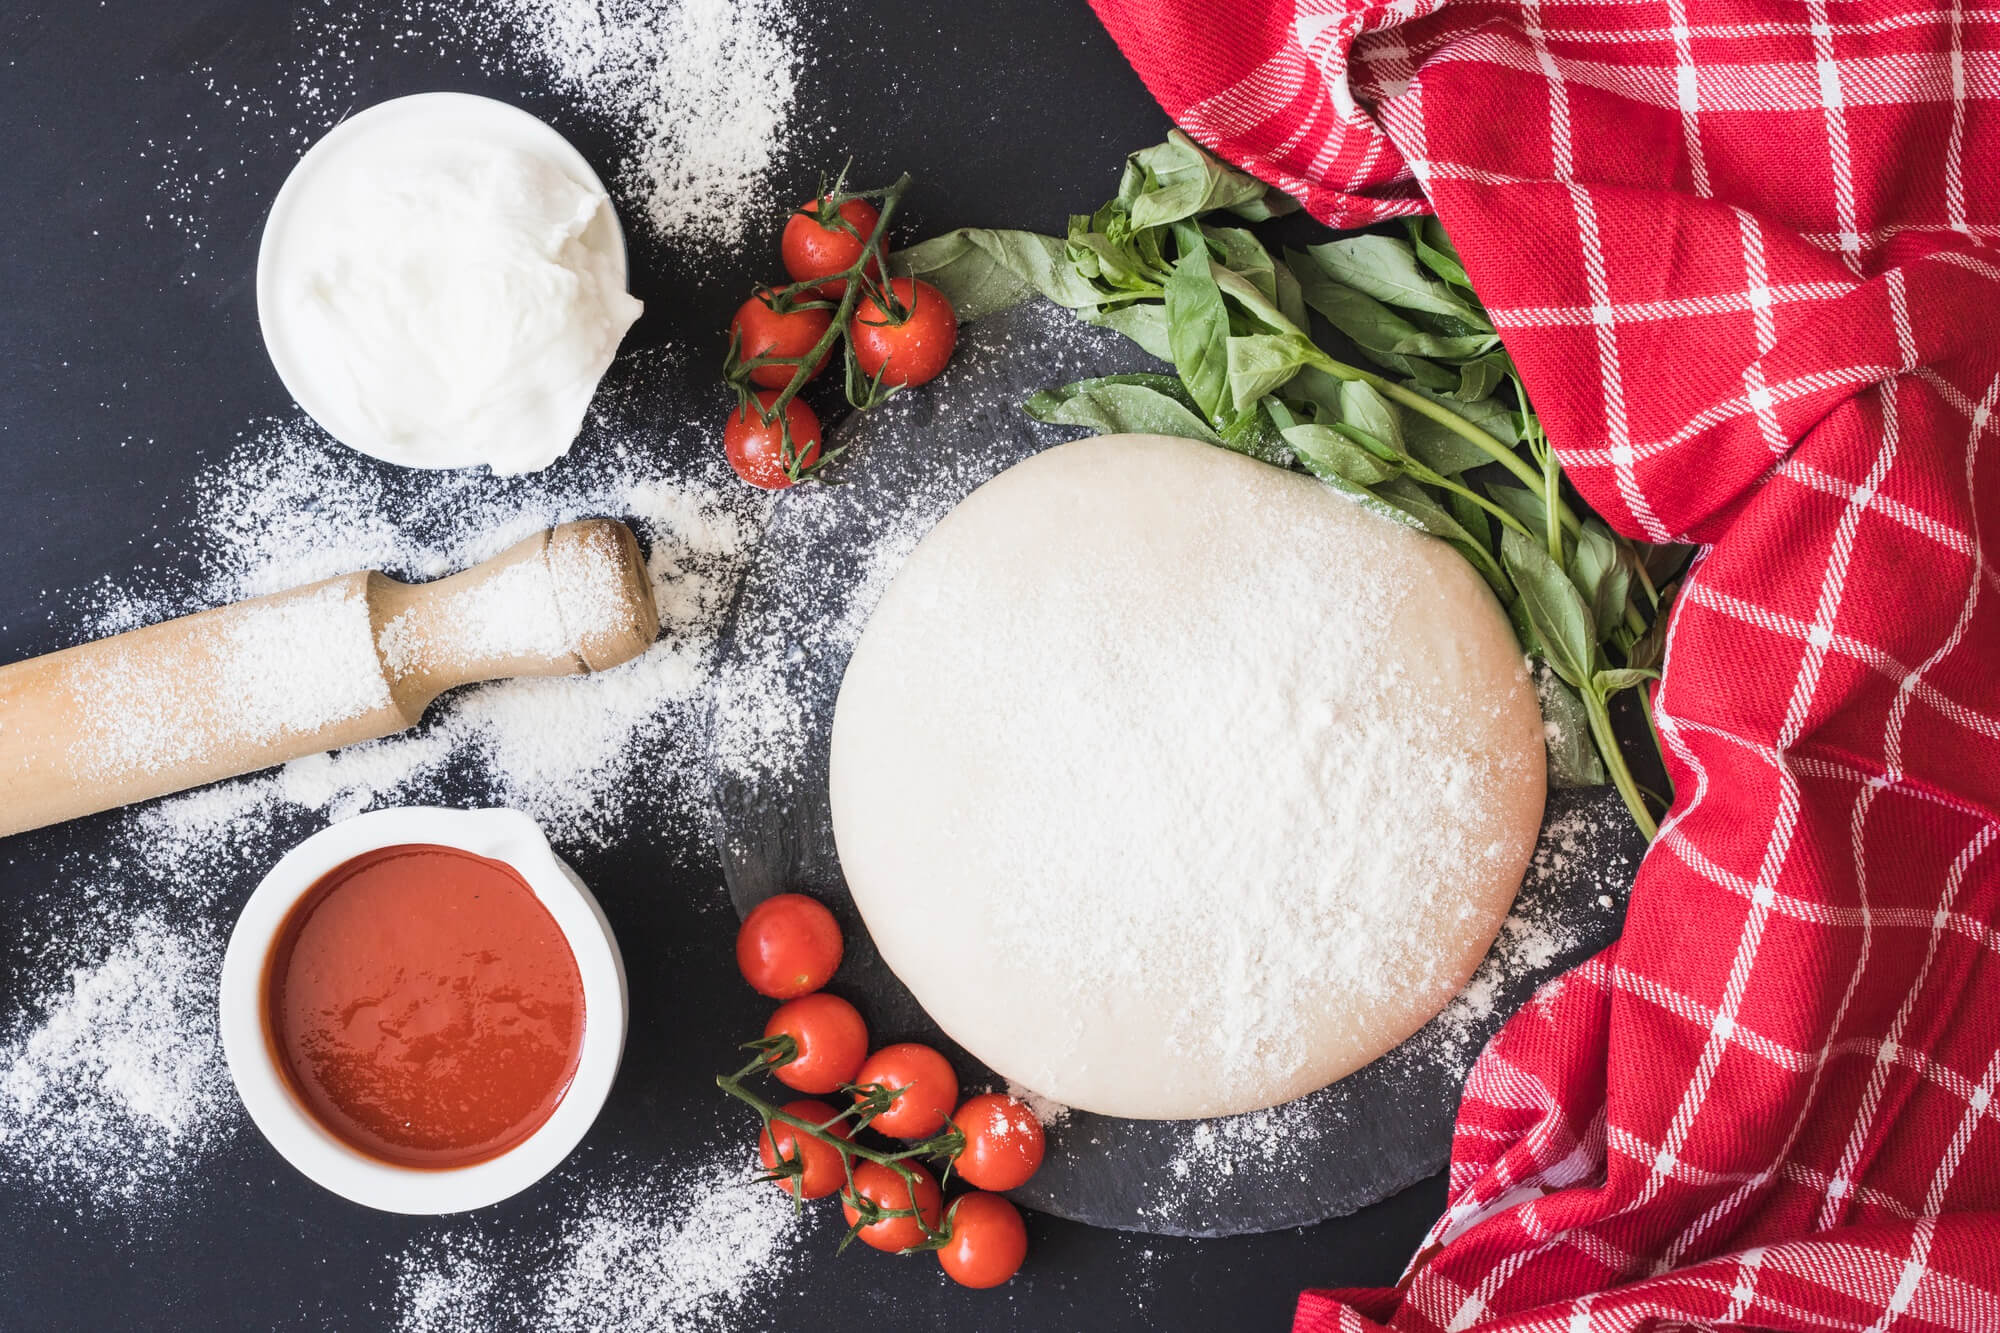 Easy Homemade Pizza Recipe with Pre-Made Dough - Quick & Delicious